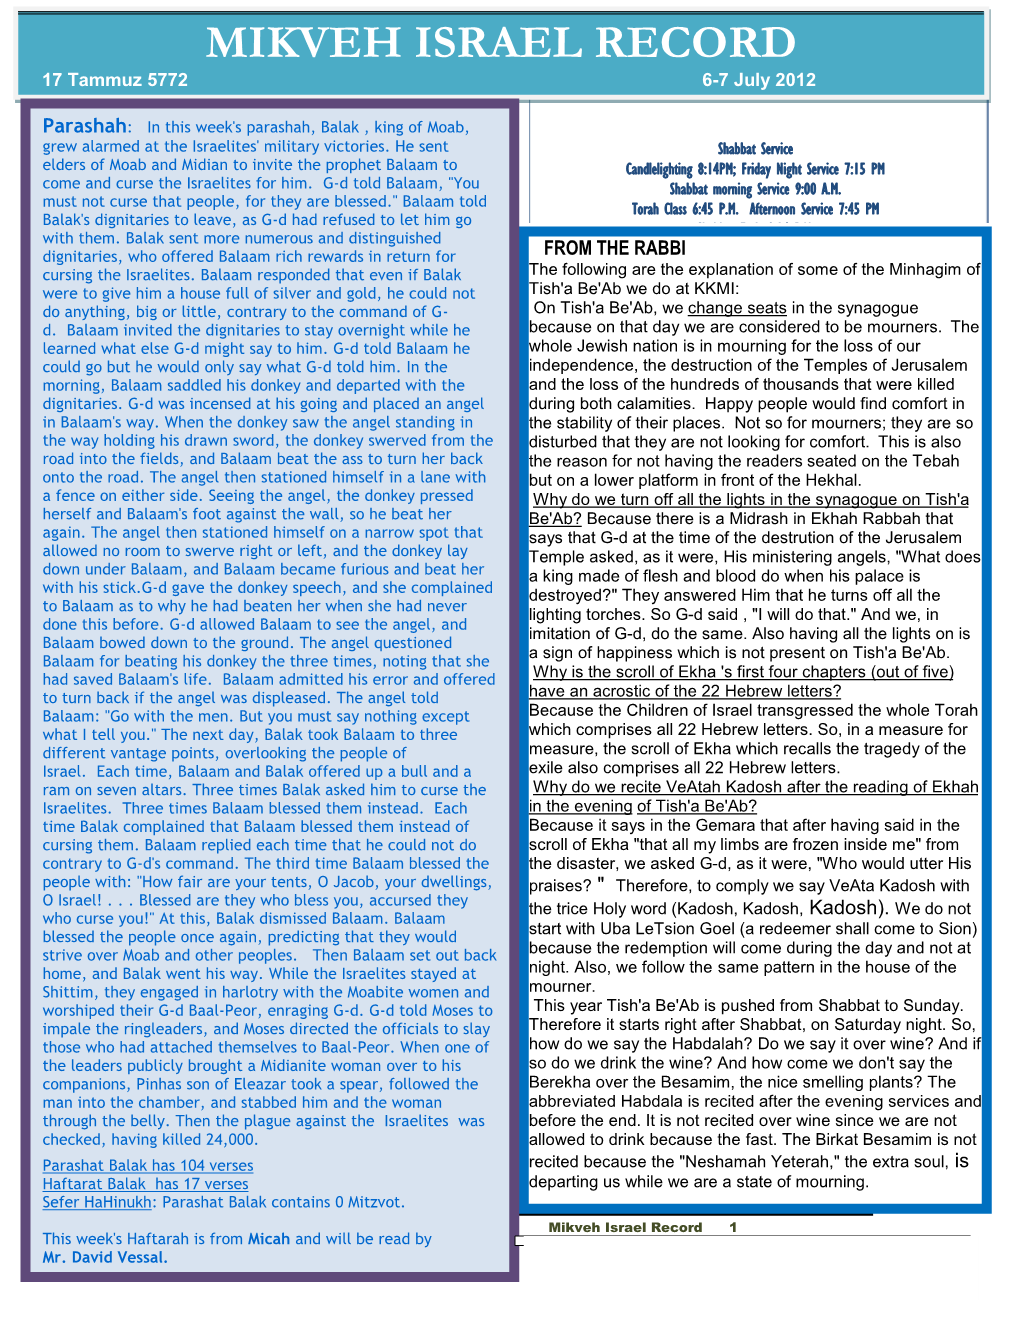 MIKVEH ISRAEL RECORD 17 Tammuz 5772 6-7 July 2012 Parashah: in This Week's Parashah, Balak , King of Moab, Grew Alarmed at the Israelites' Military Victories